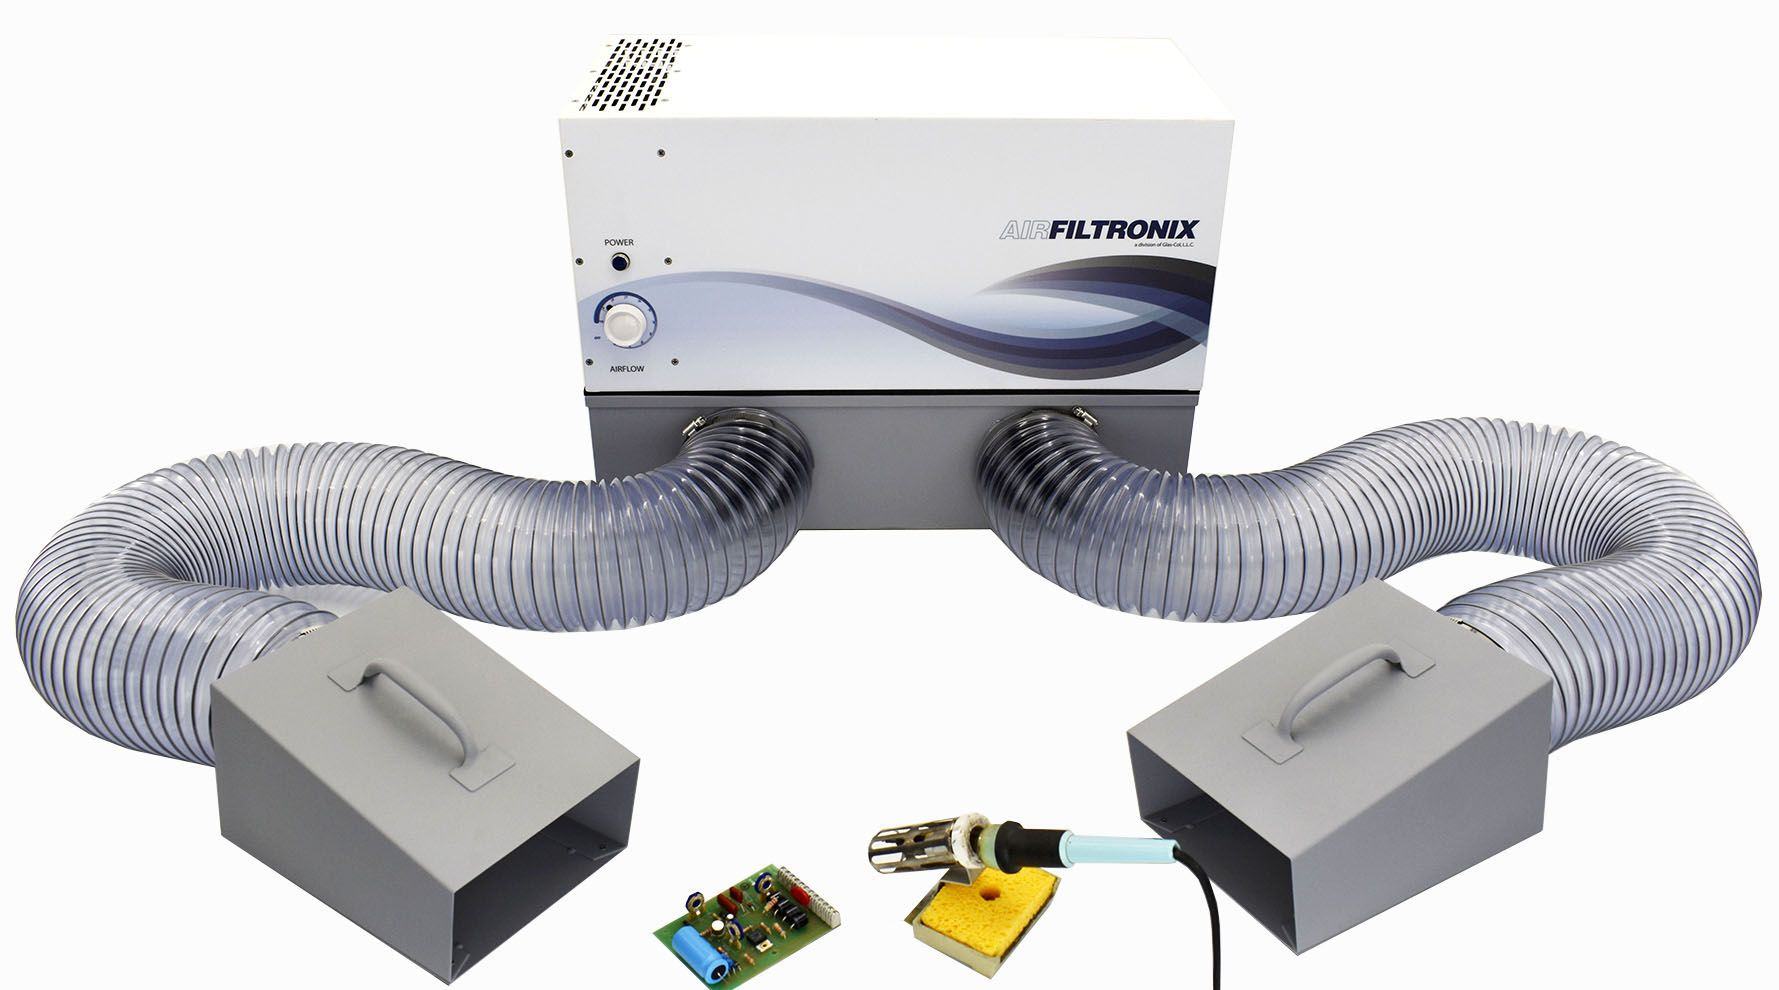 Airfiltronix Scavenger Series Portable Fume/Particle Extractors